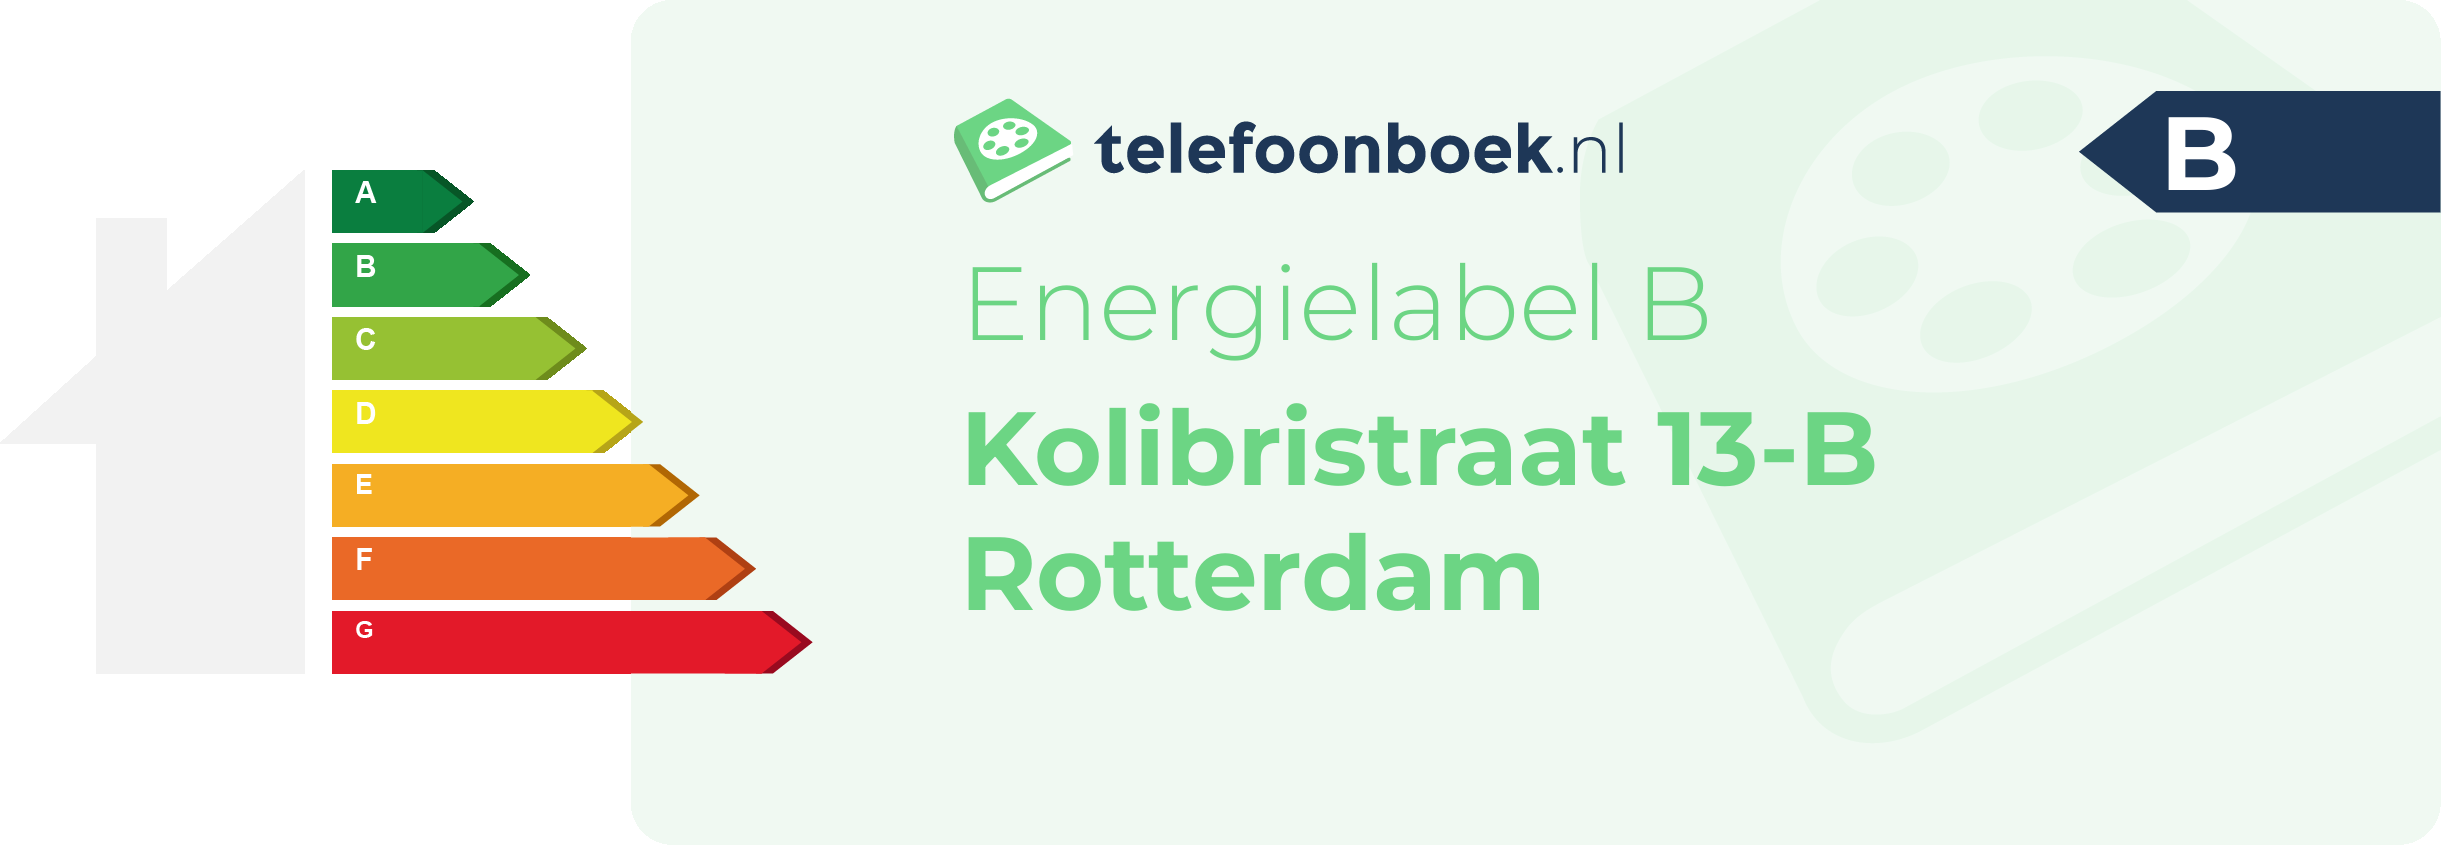 Energielabel Kolibristraat 13-B Rotterdam